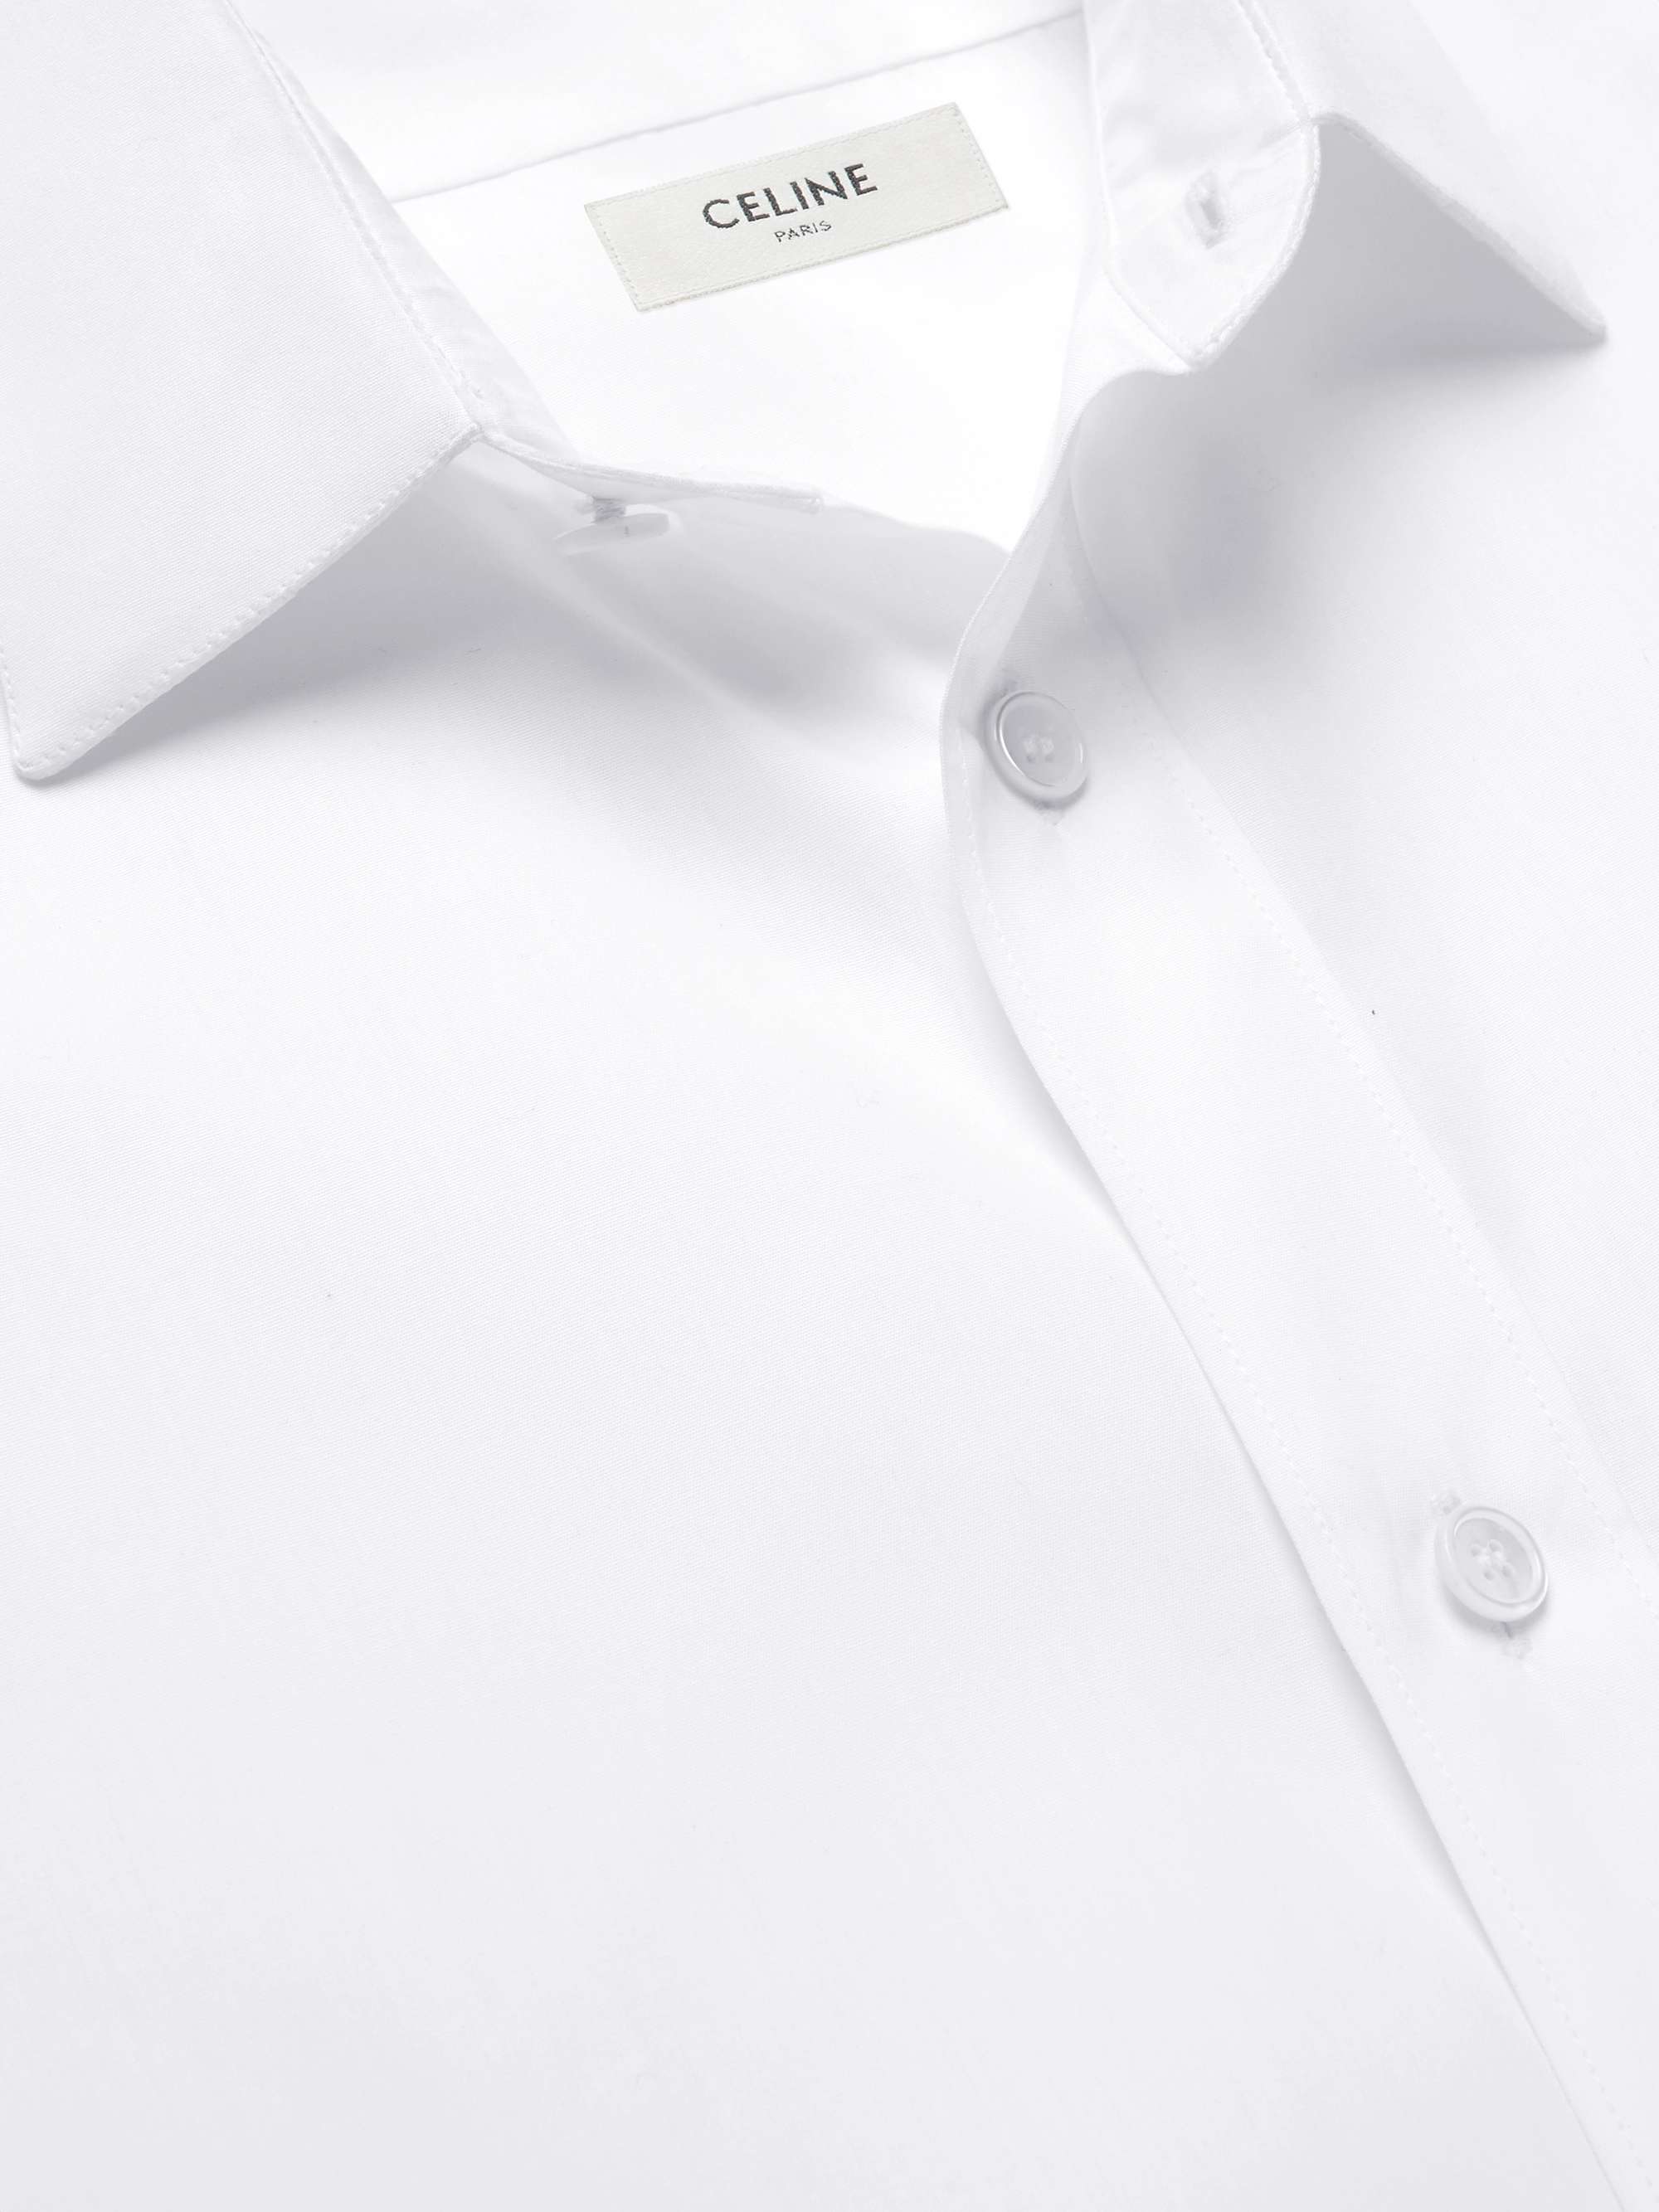 CELINE HOMME C-Embroidered Cotton-Poplin Shirt